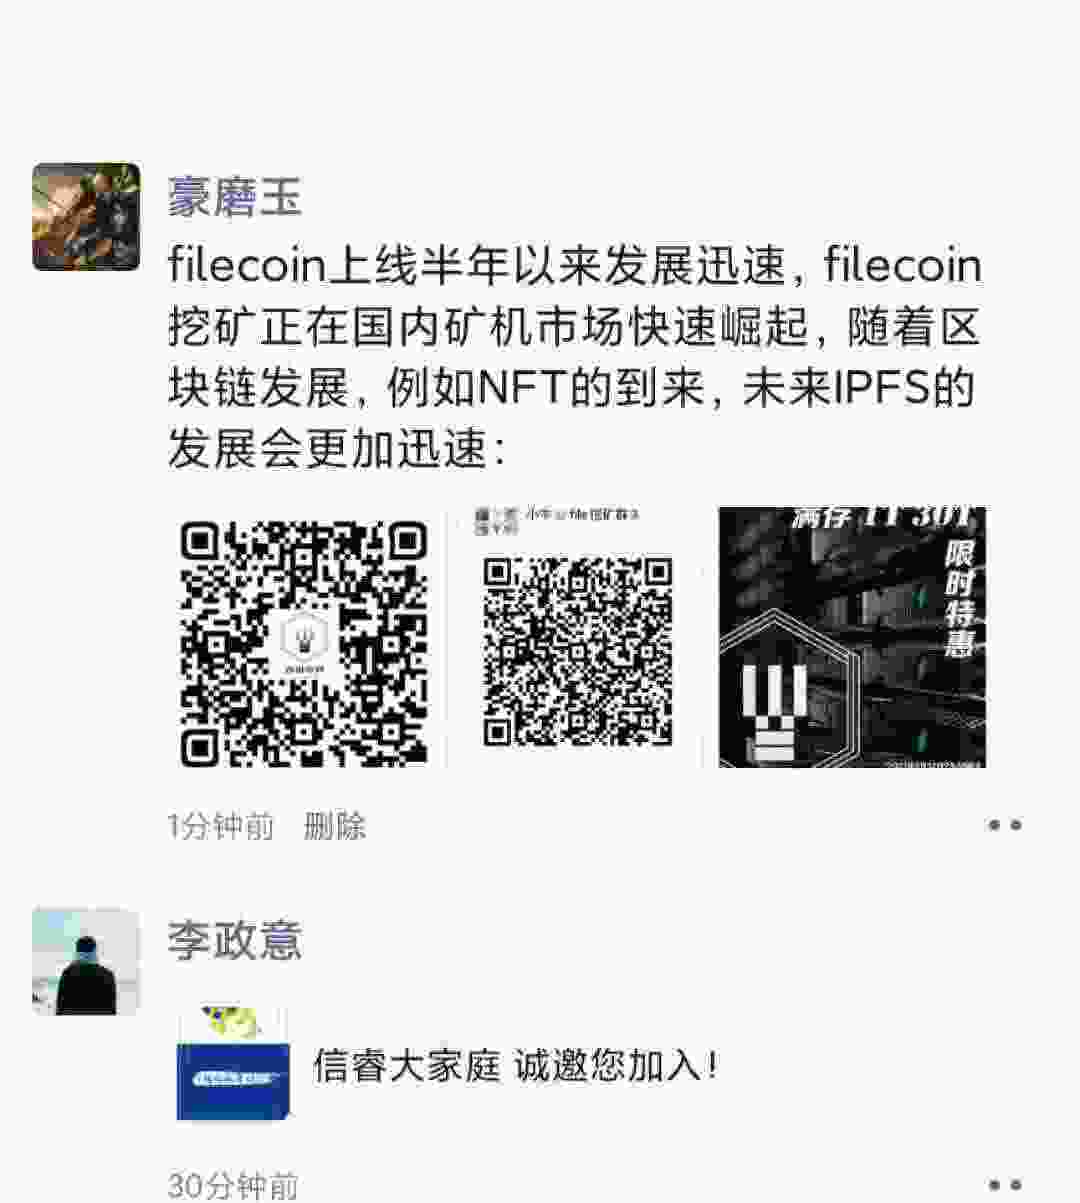 filecoin.jpg